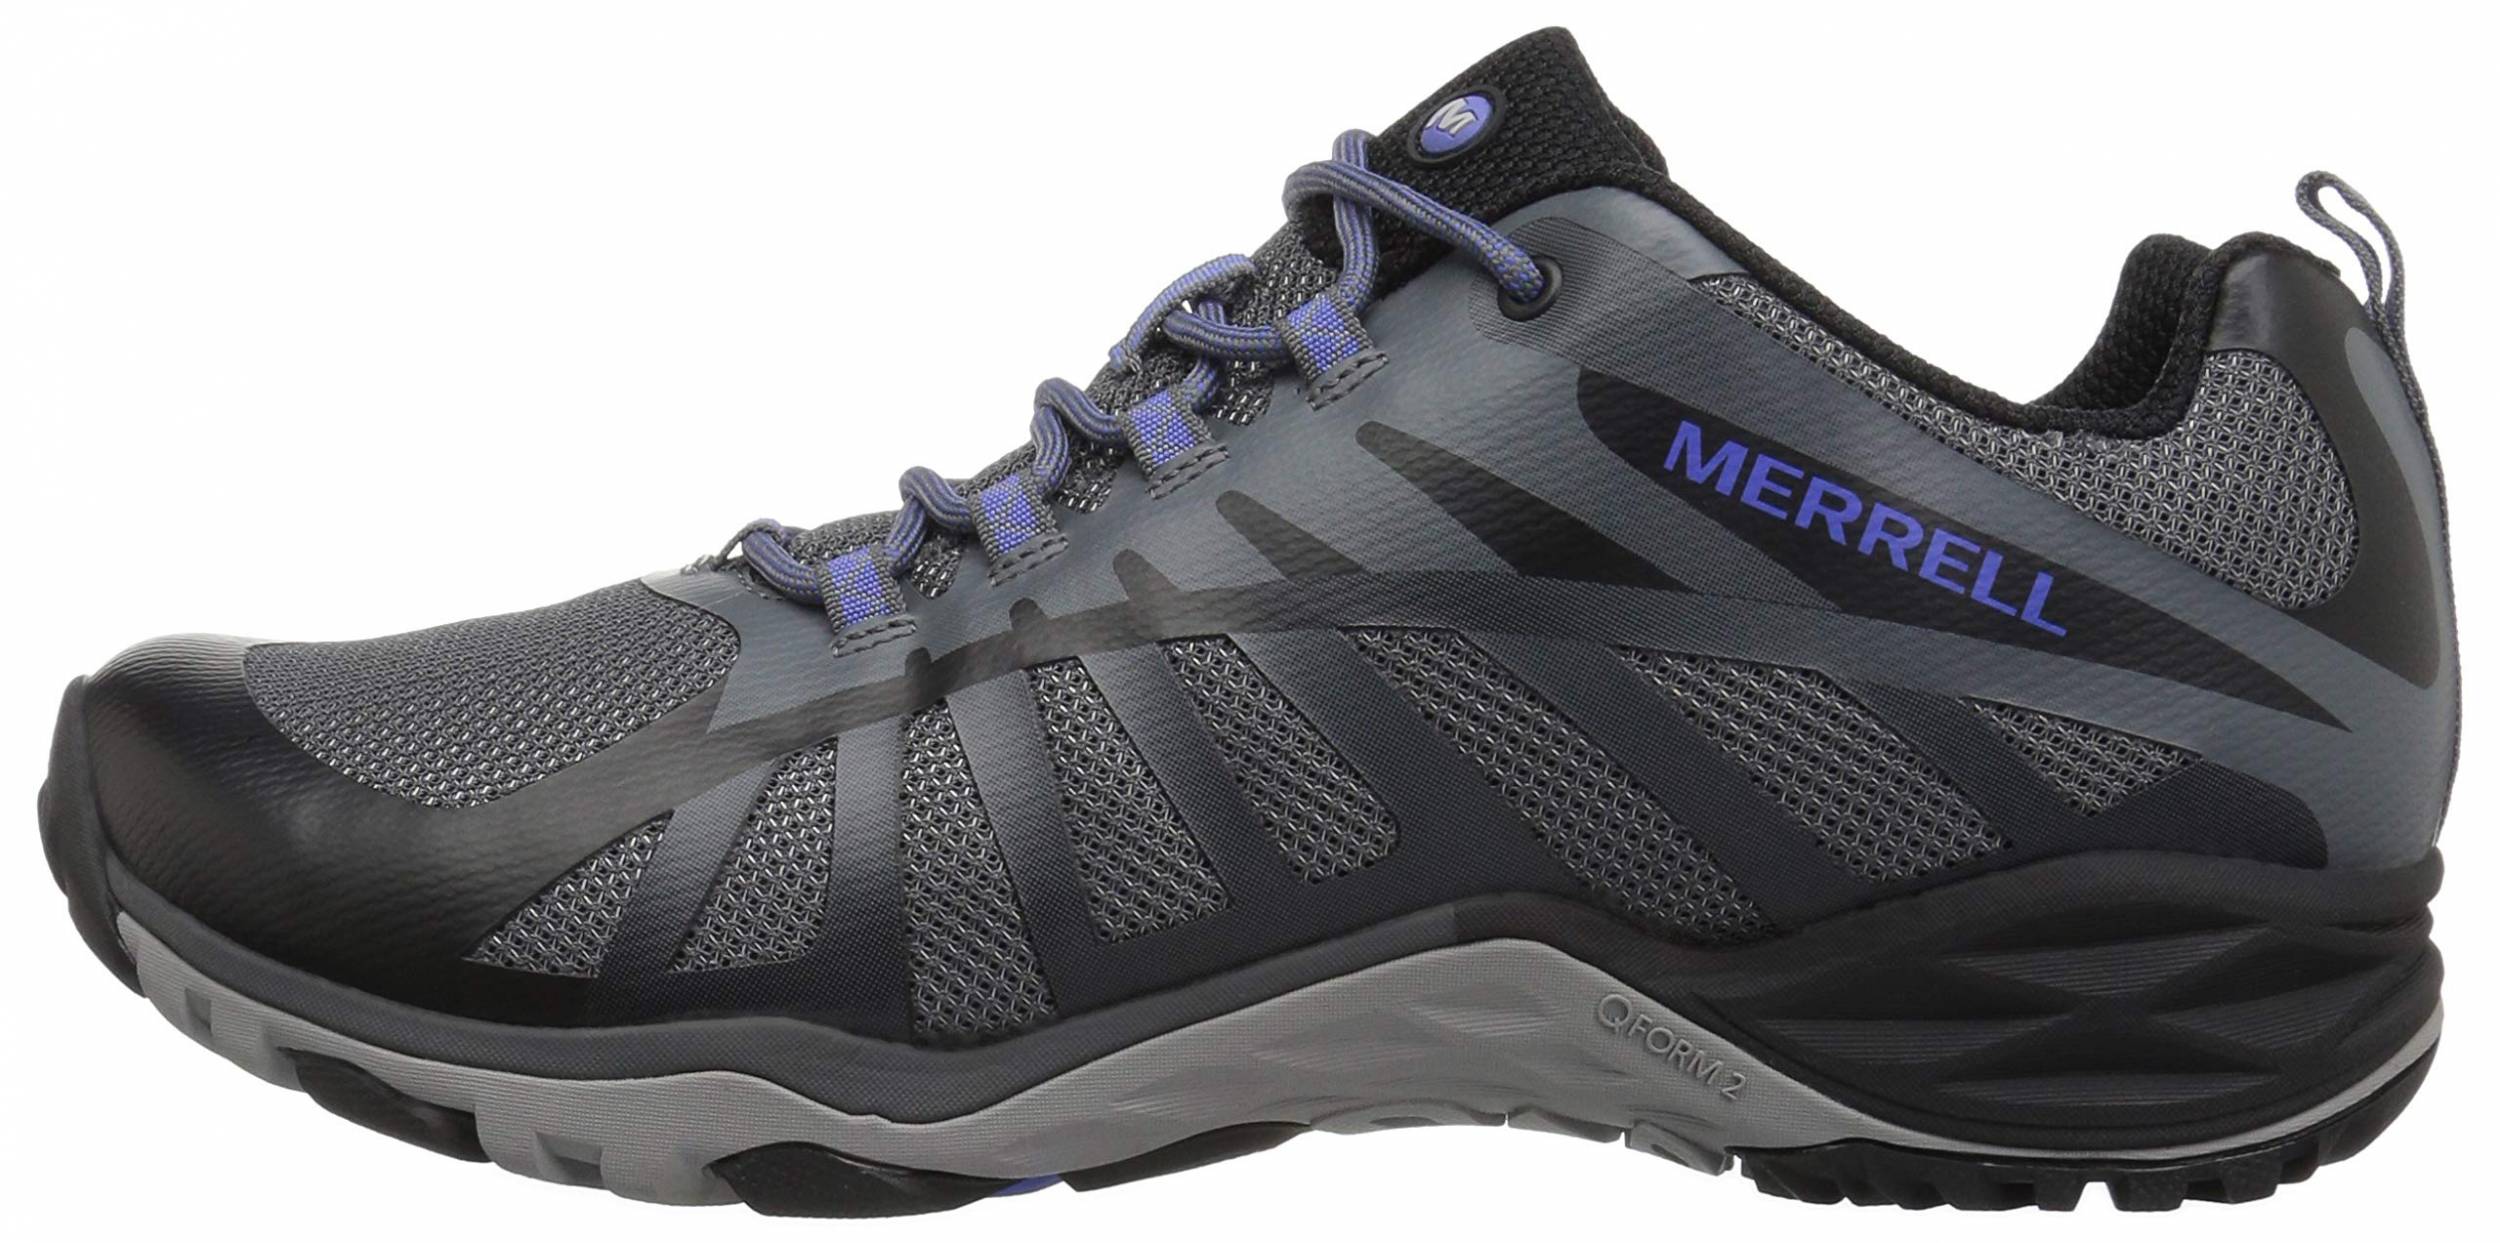 Merrell Womens Siren Edge Q2 Walking Shoes Green Sports Outdoors Trainers 